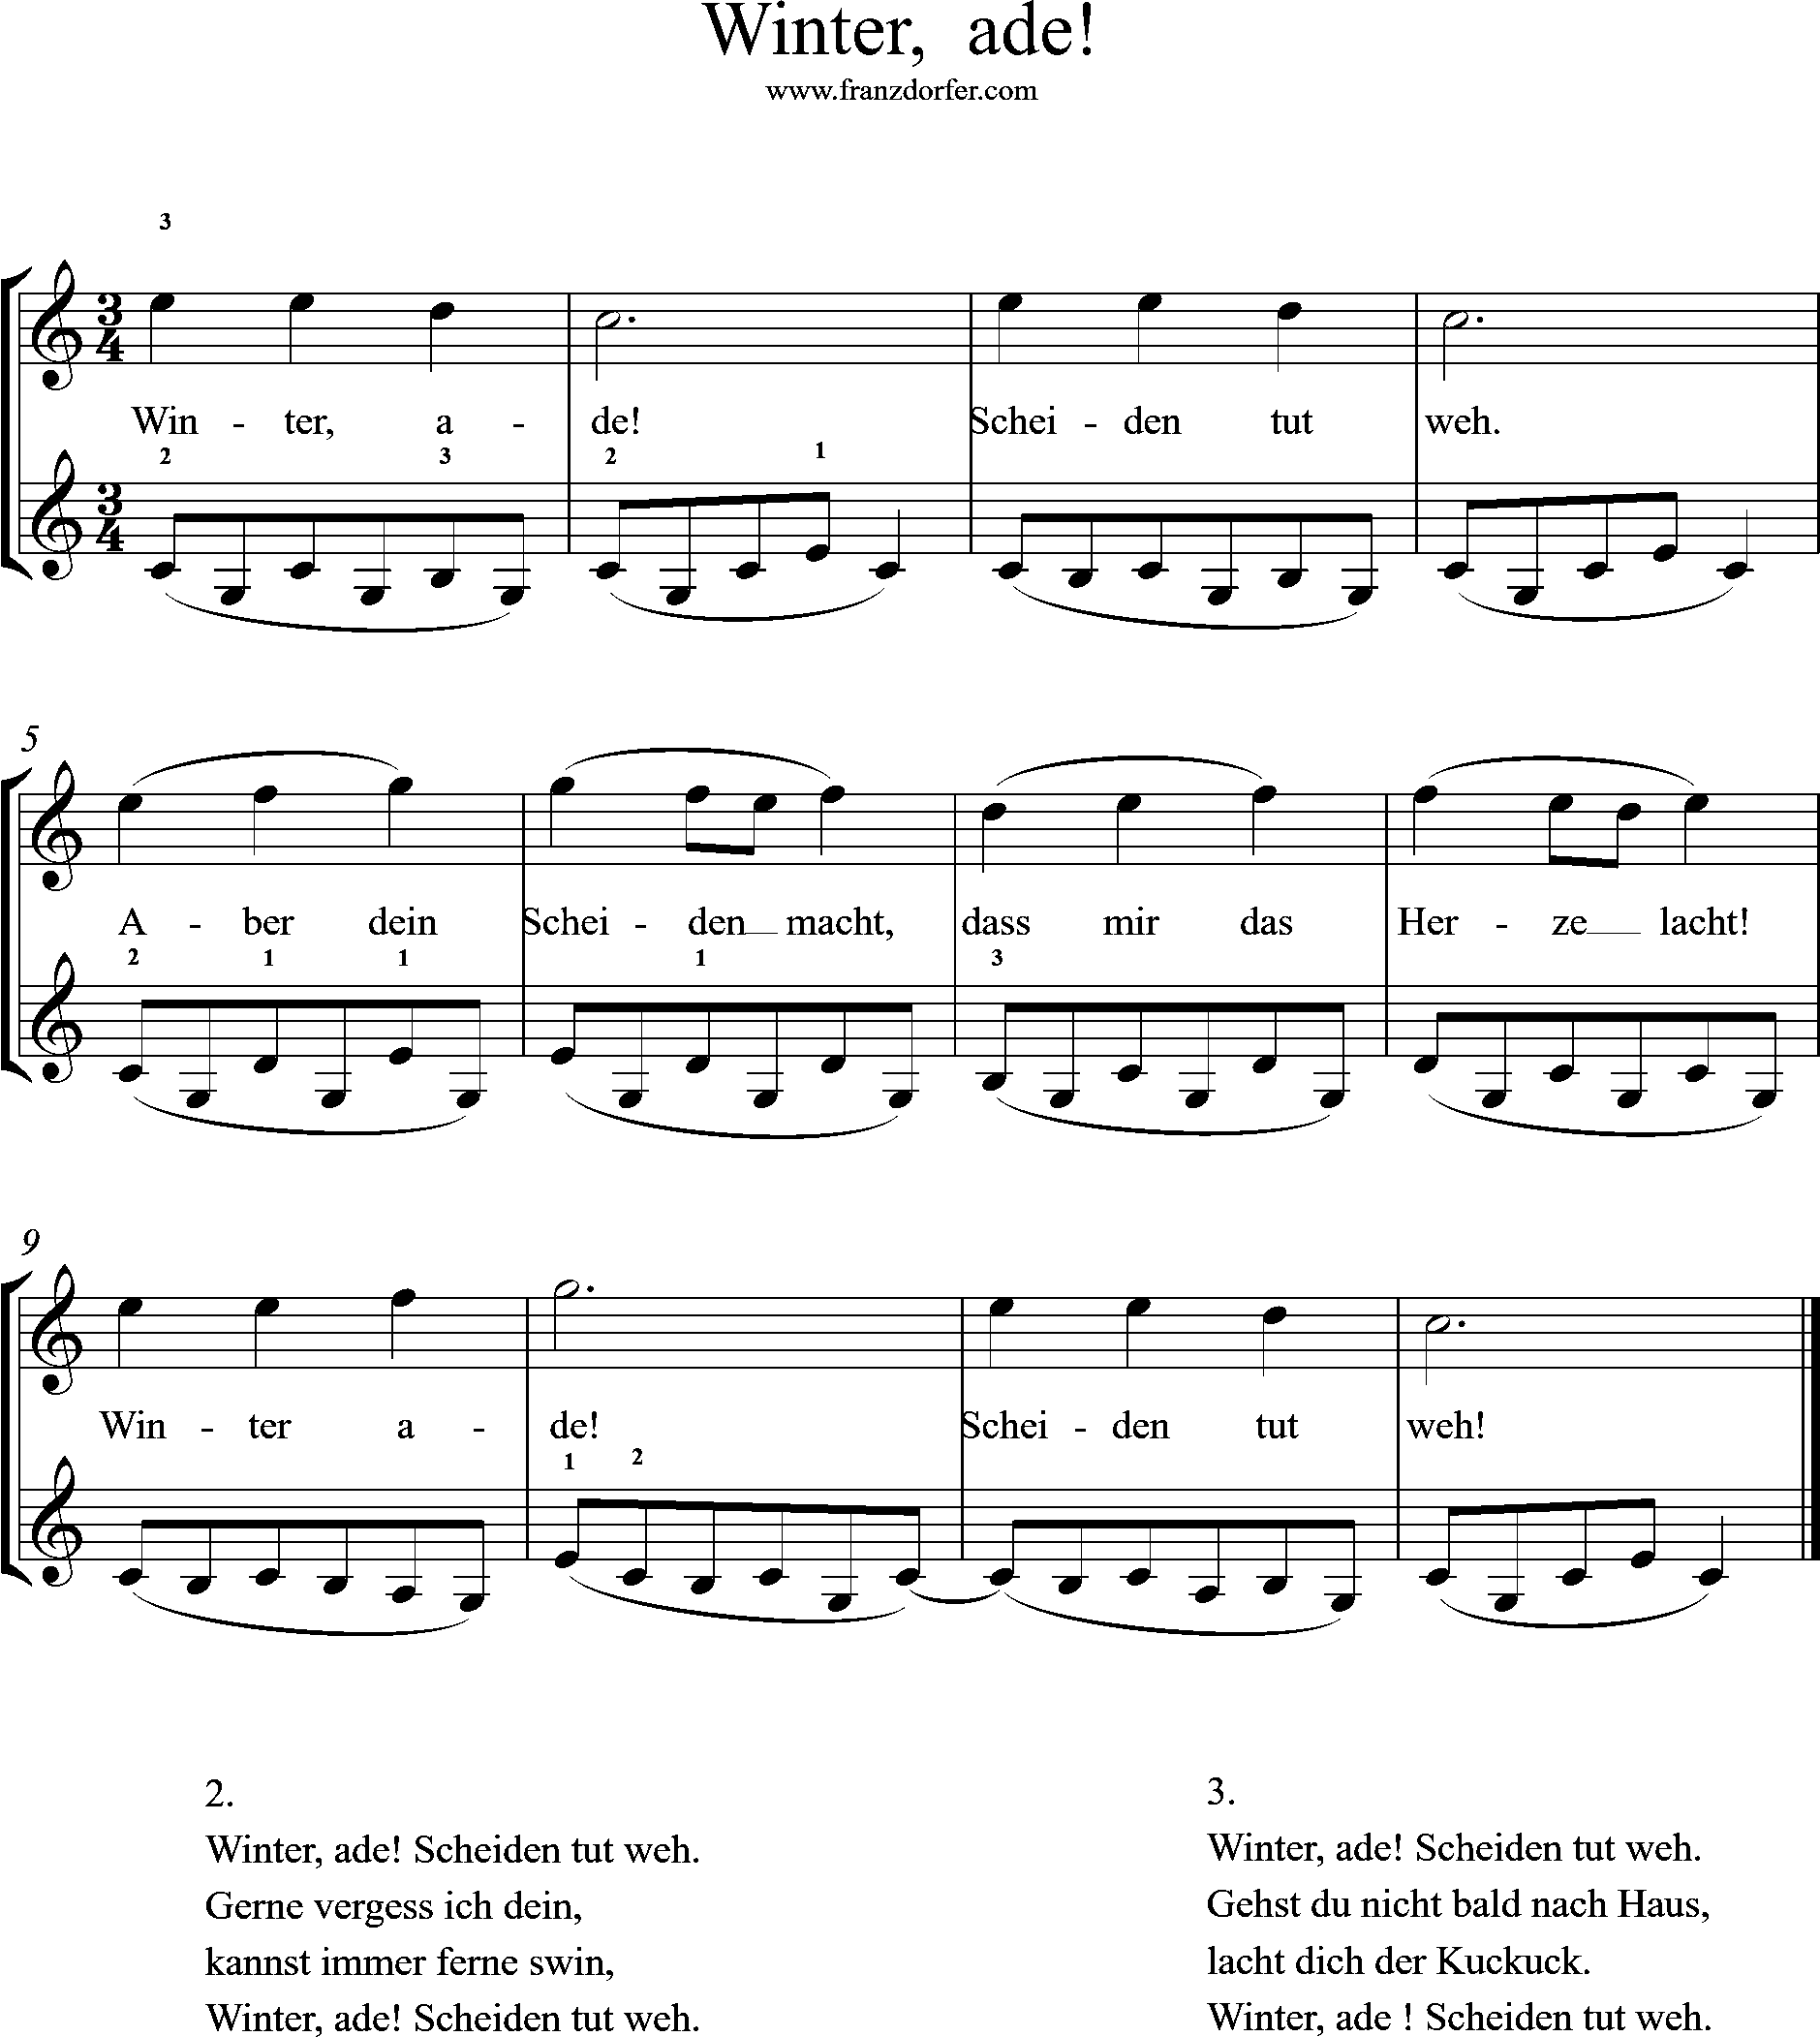 klaviernoten, Ferdinand Beyer, op. 101, G-Dur, Winter ade